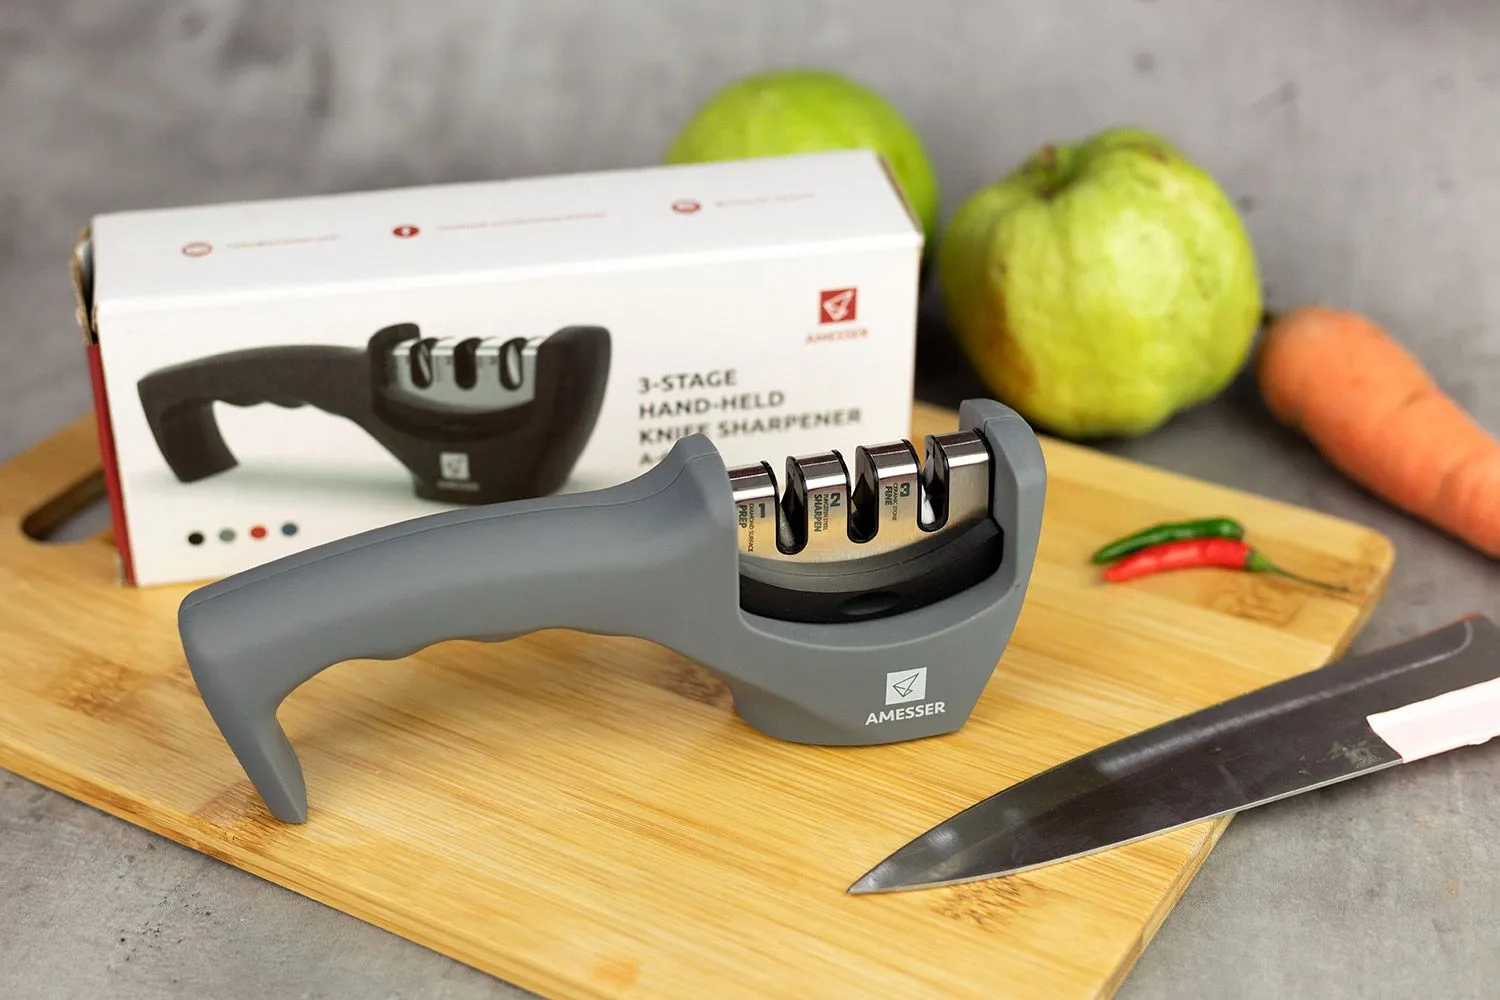 Diamond Coated Kitchen Knife Sharpener With Safety Glove